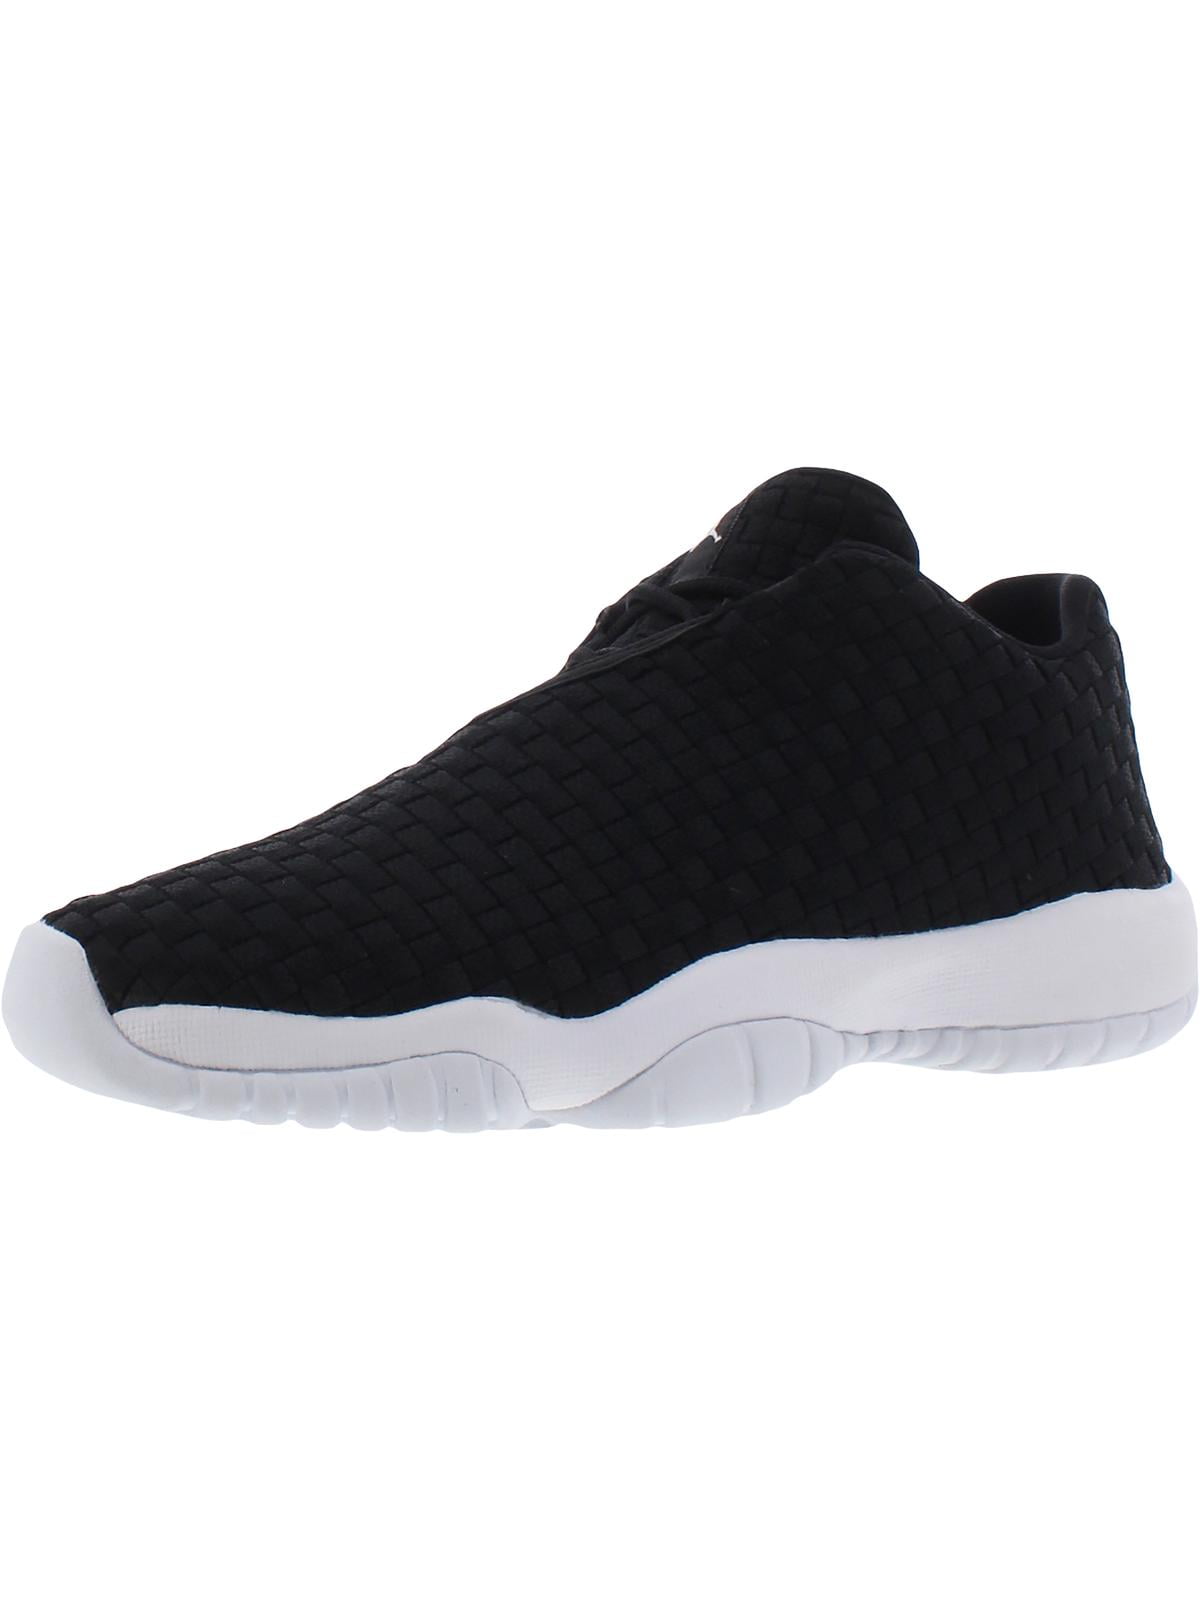 Nike Boy's Jordan Future Athletic Basketball Sneakers Size 4 -